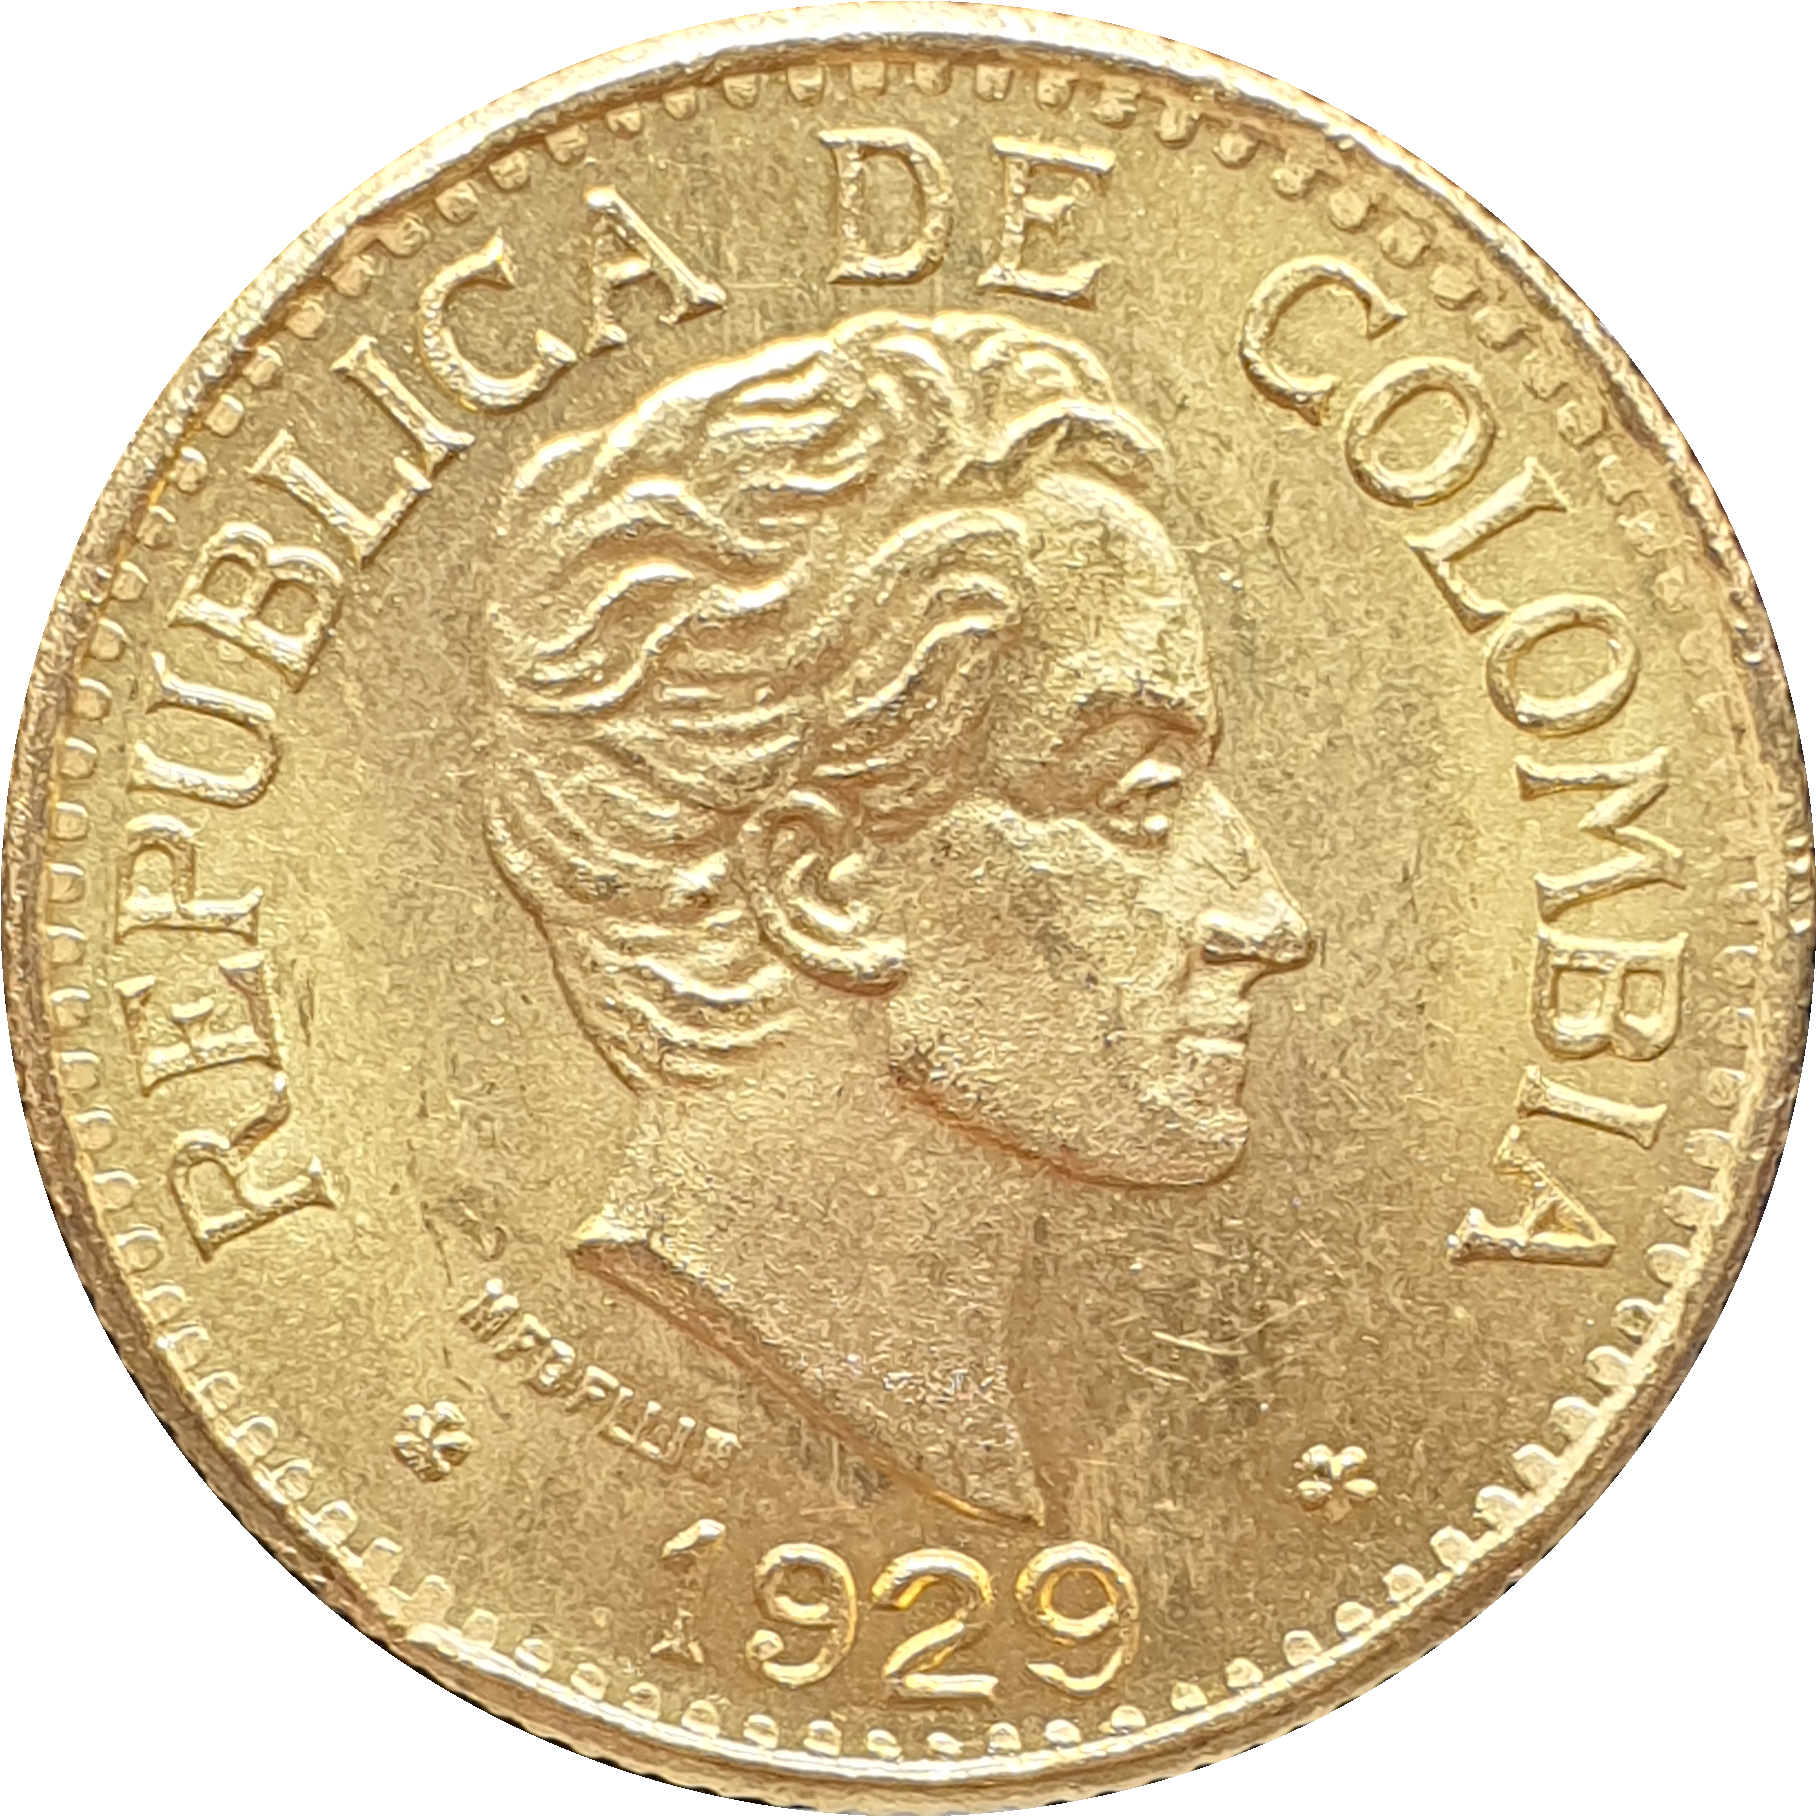 Colombia - 5 pesos - 1929